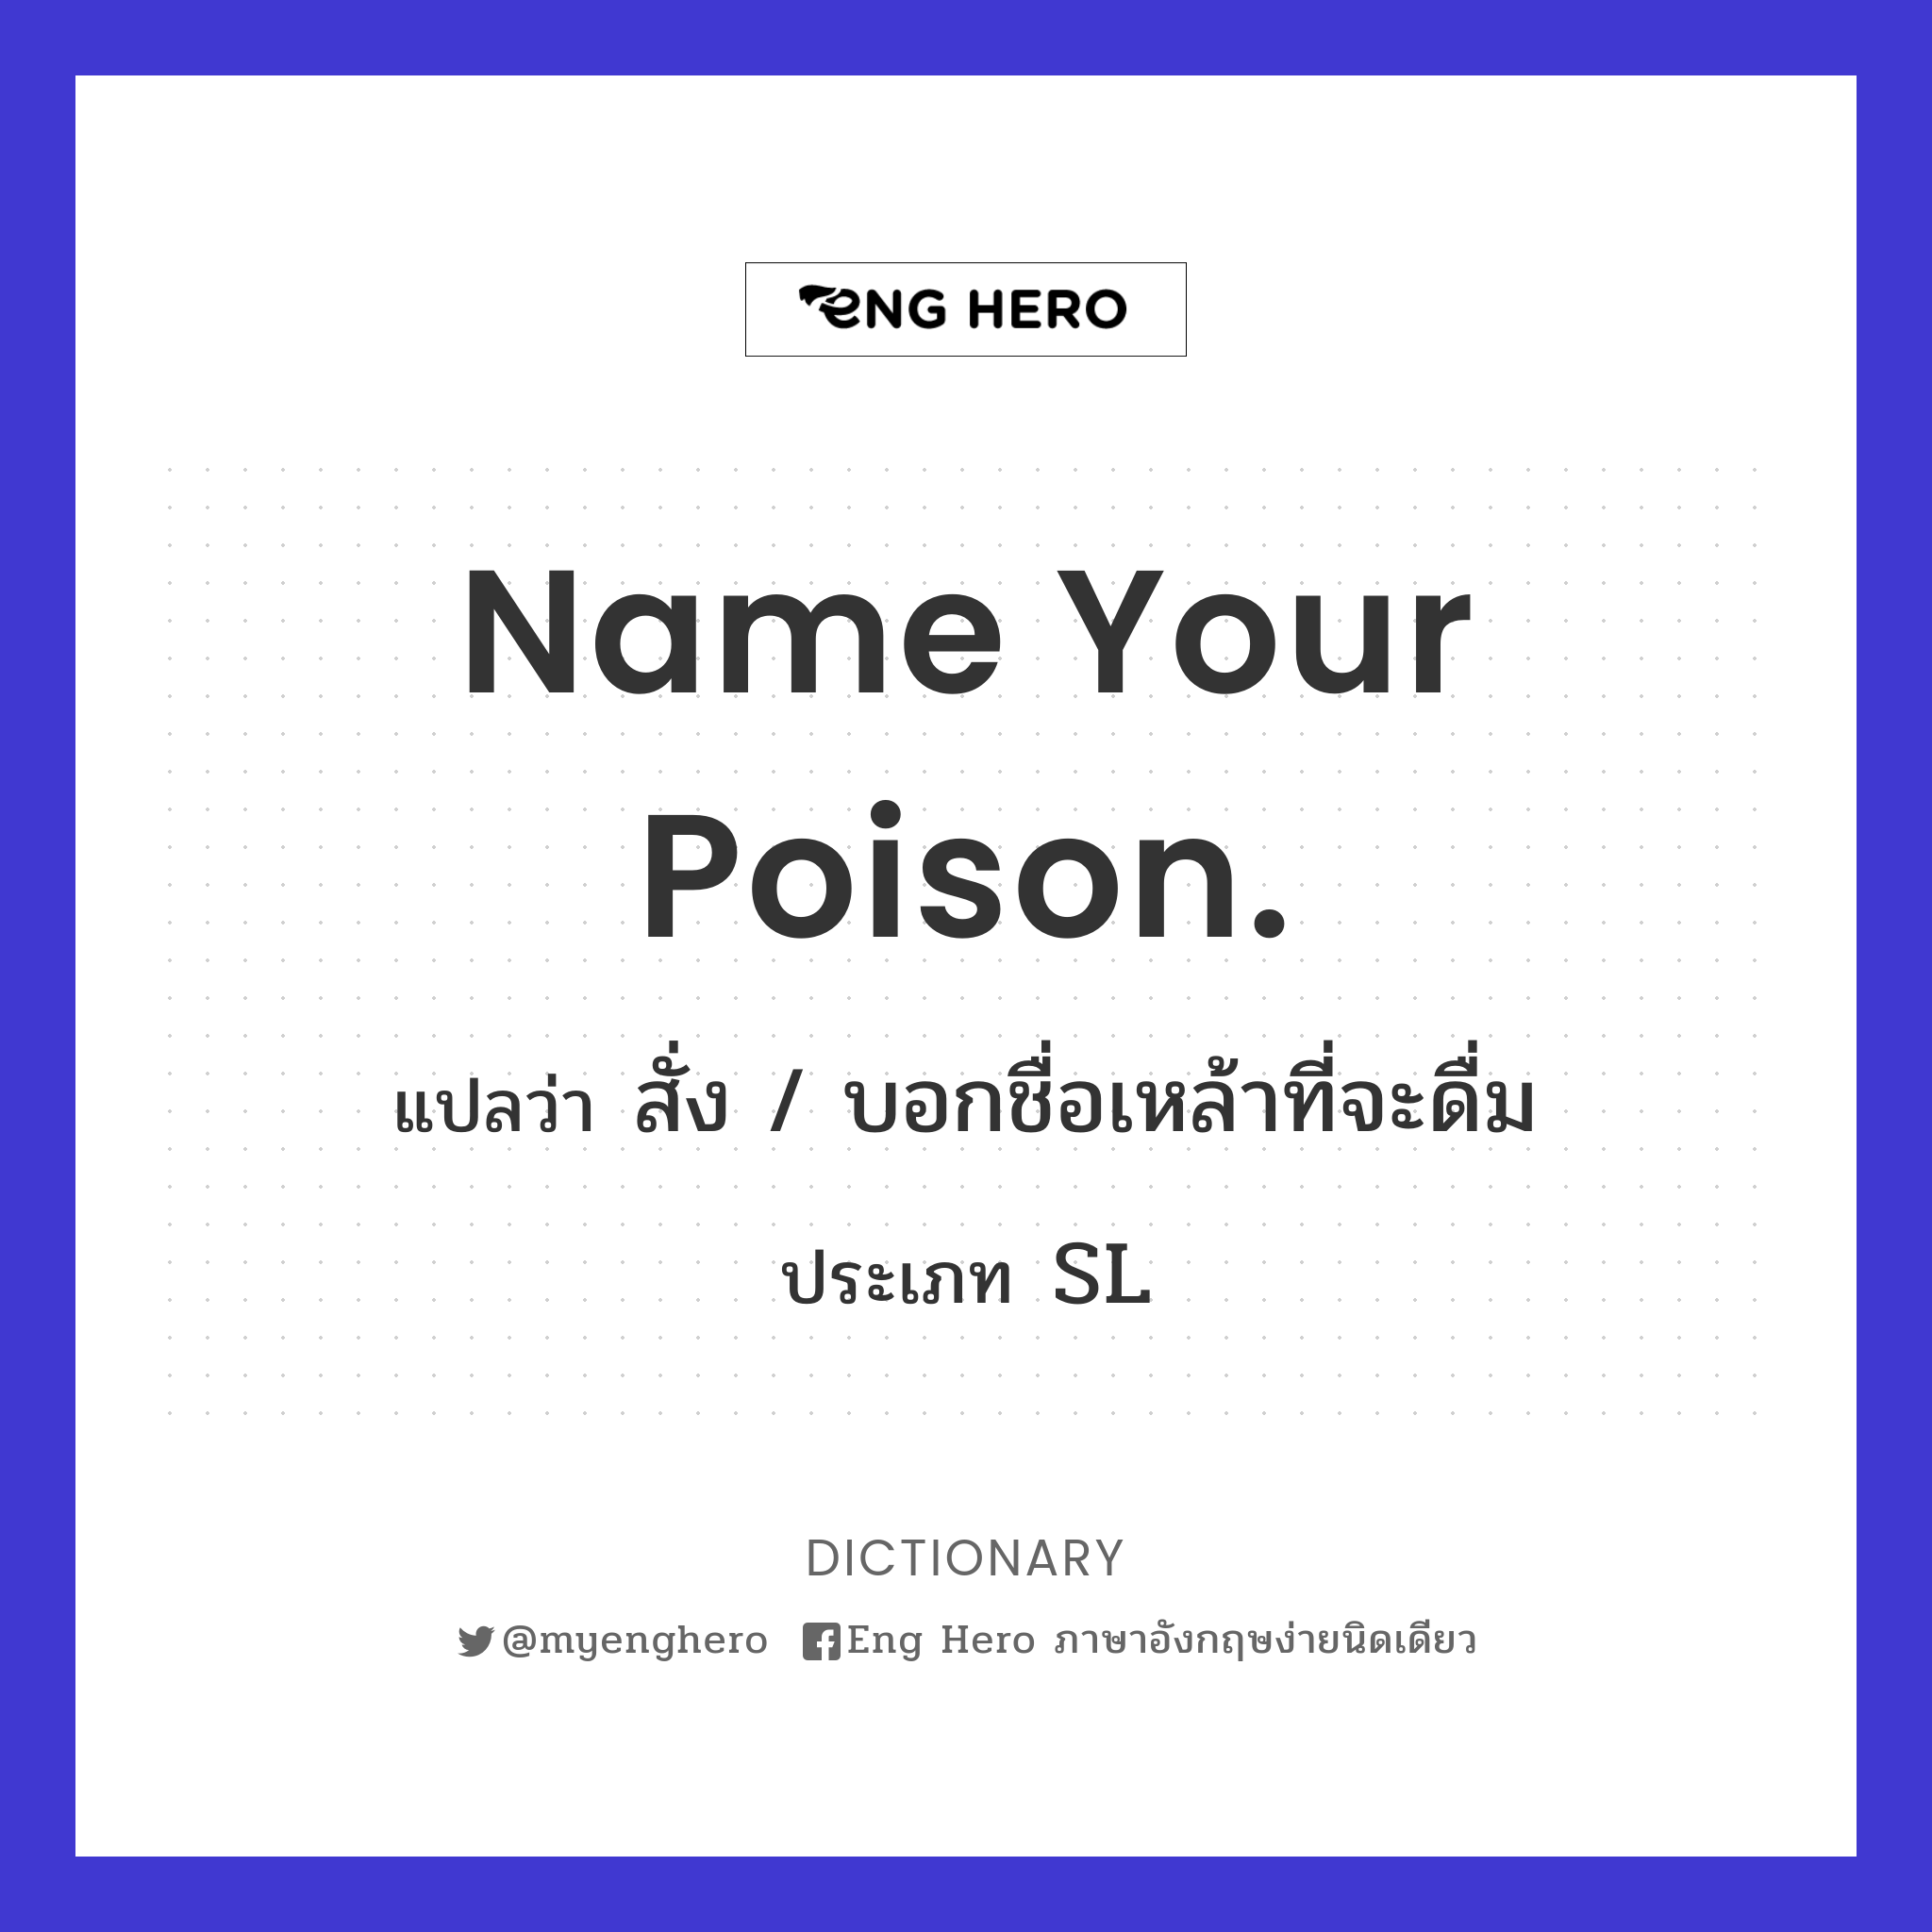 Name your poison.